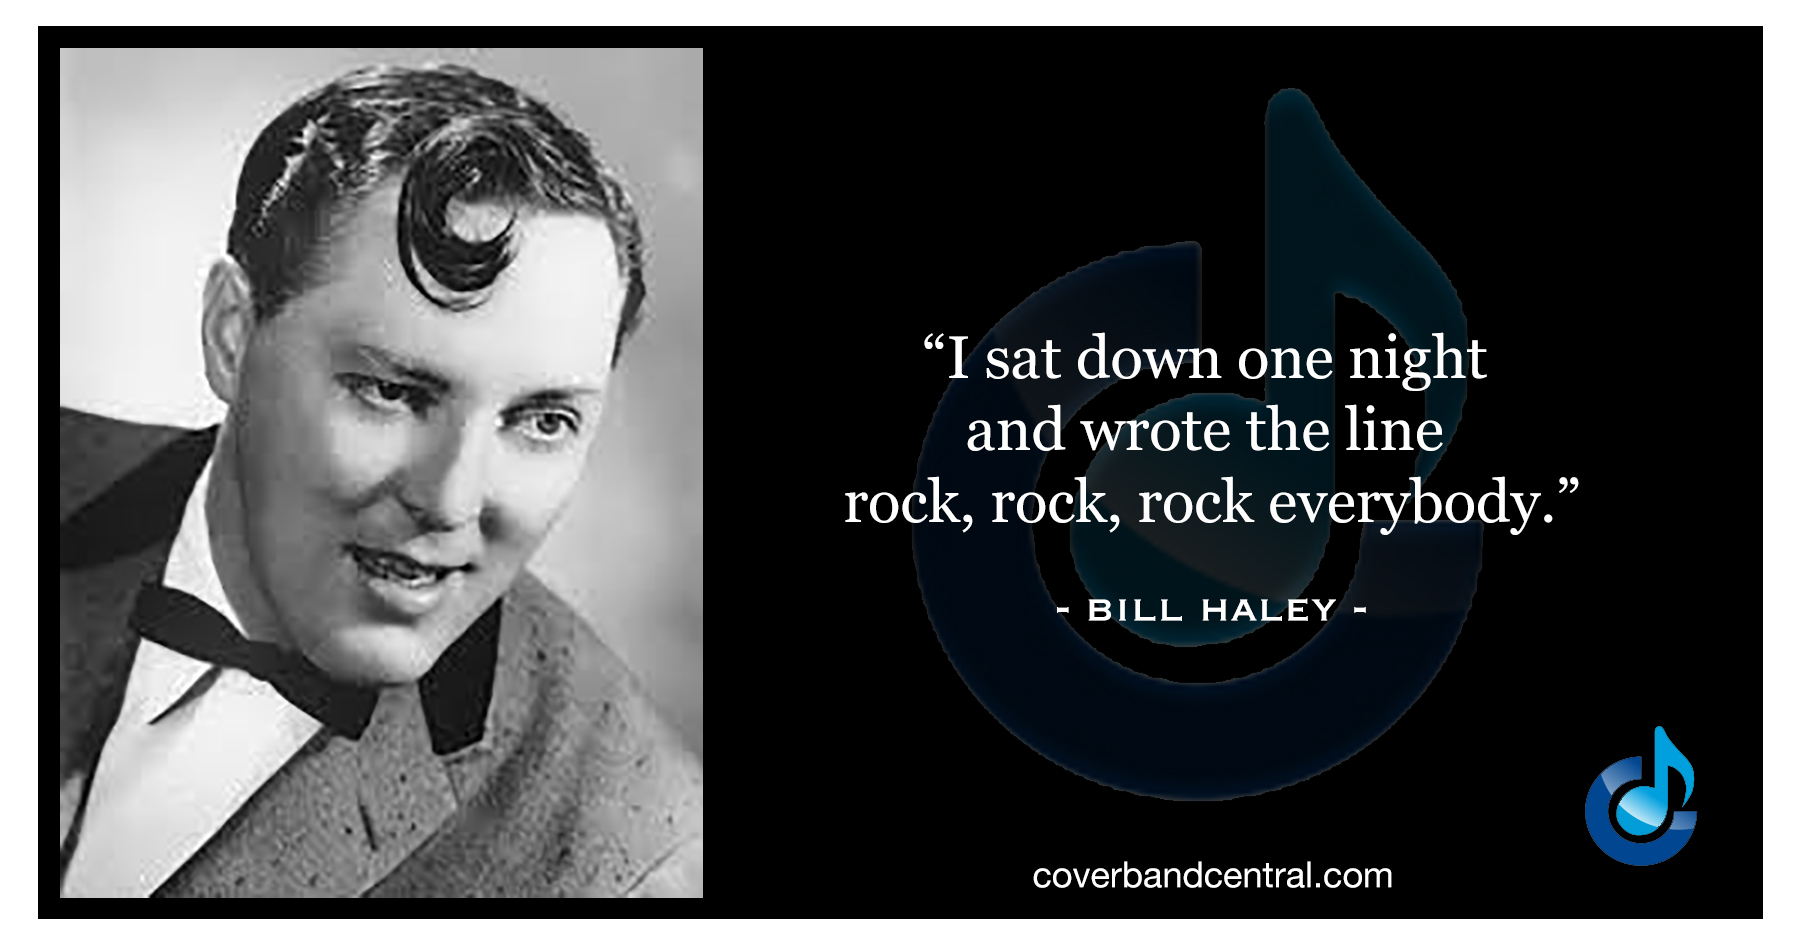 Bill Haley quote